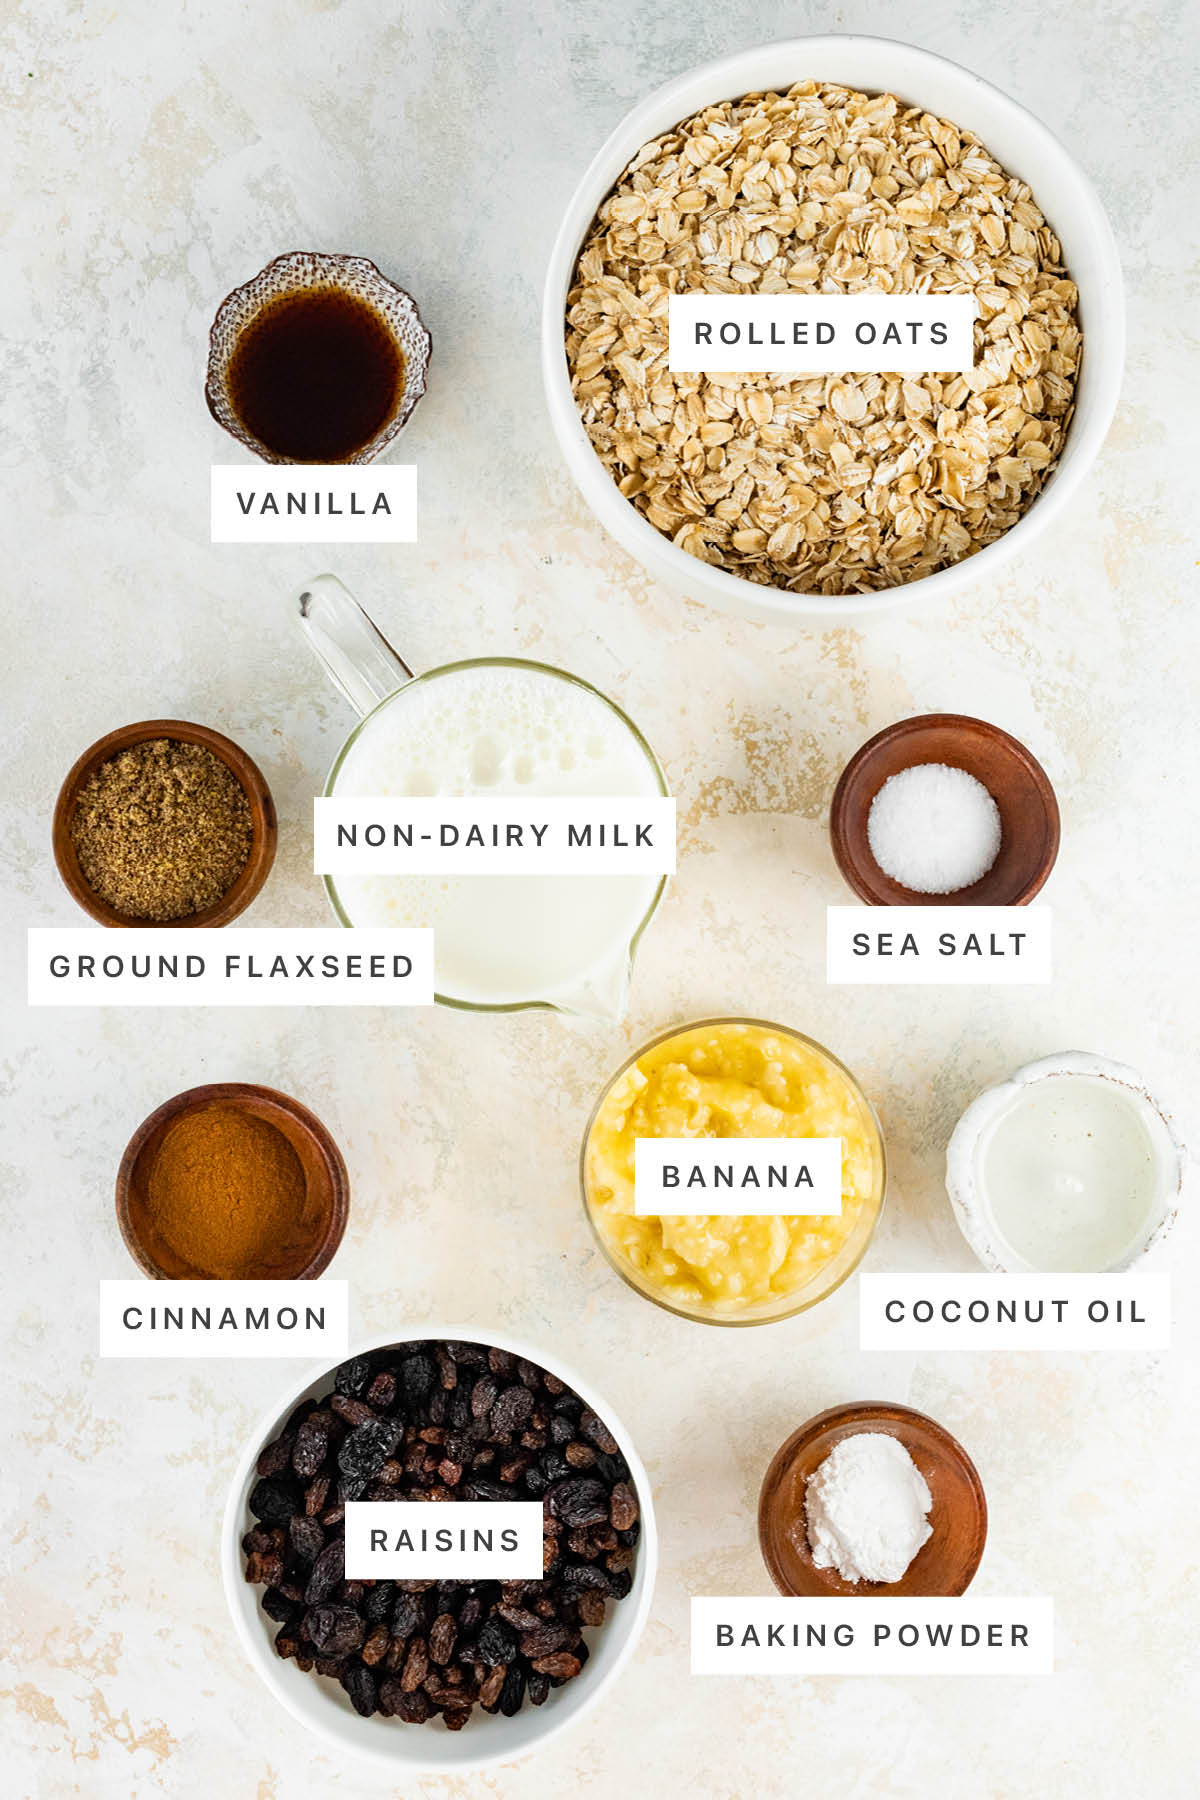 Ingredients measured out to make Cinnamon Raisin Baked Oatmeal: vanilla, rolled oats, non-dairy milk, ground flaxseed, sea salt, cinnamon, banana, coconut oil, raisins and baking powder.